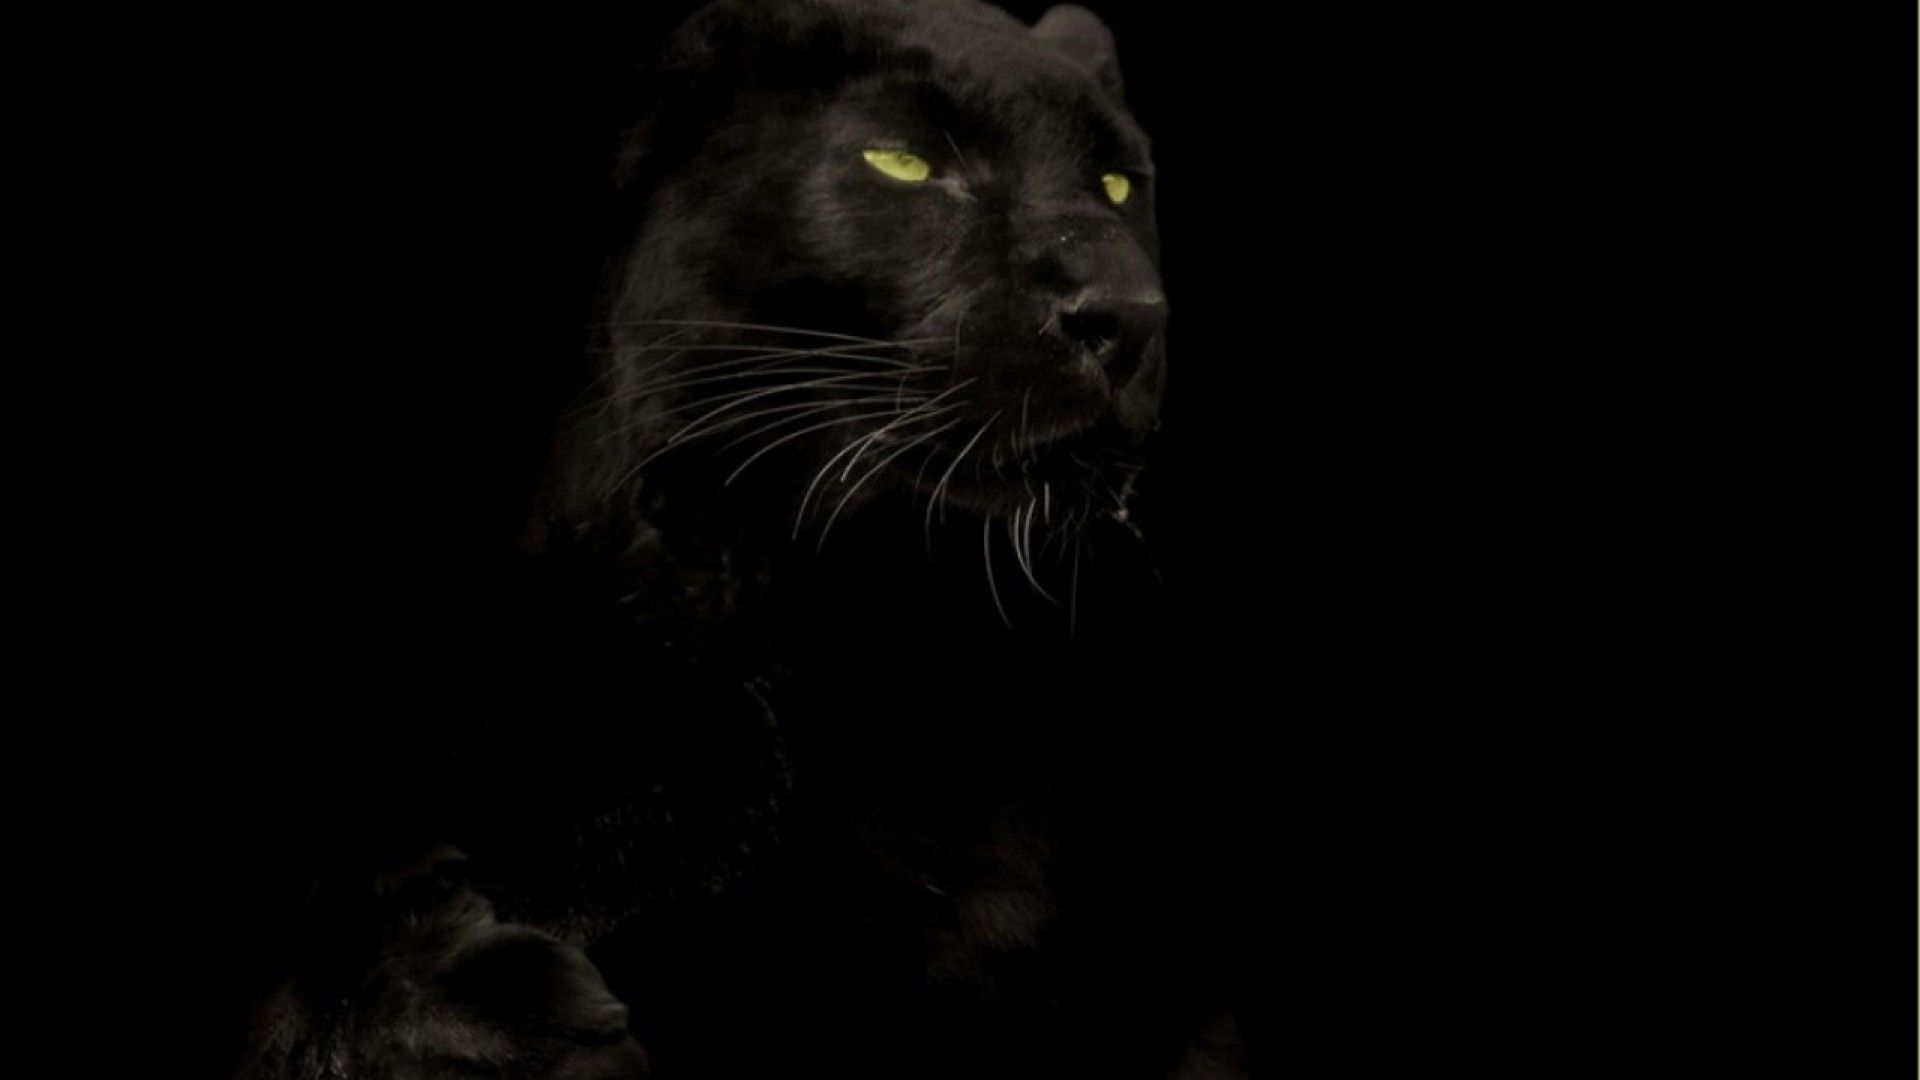 Black Panther Big Cat Wallpapers - Wallpaper Cave